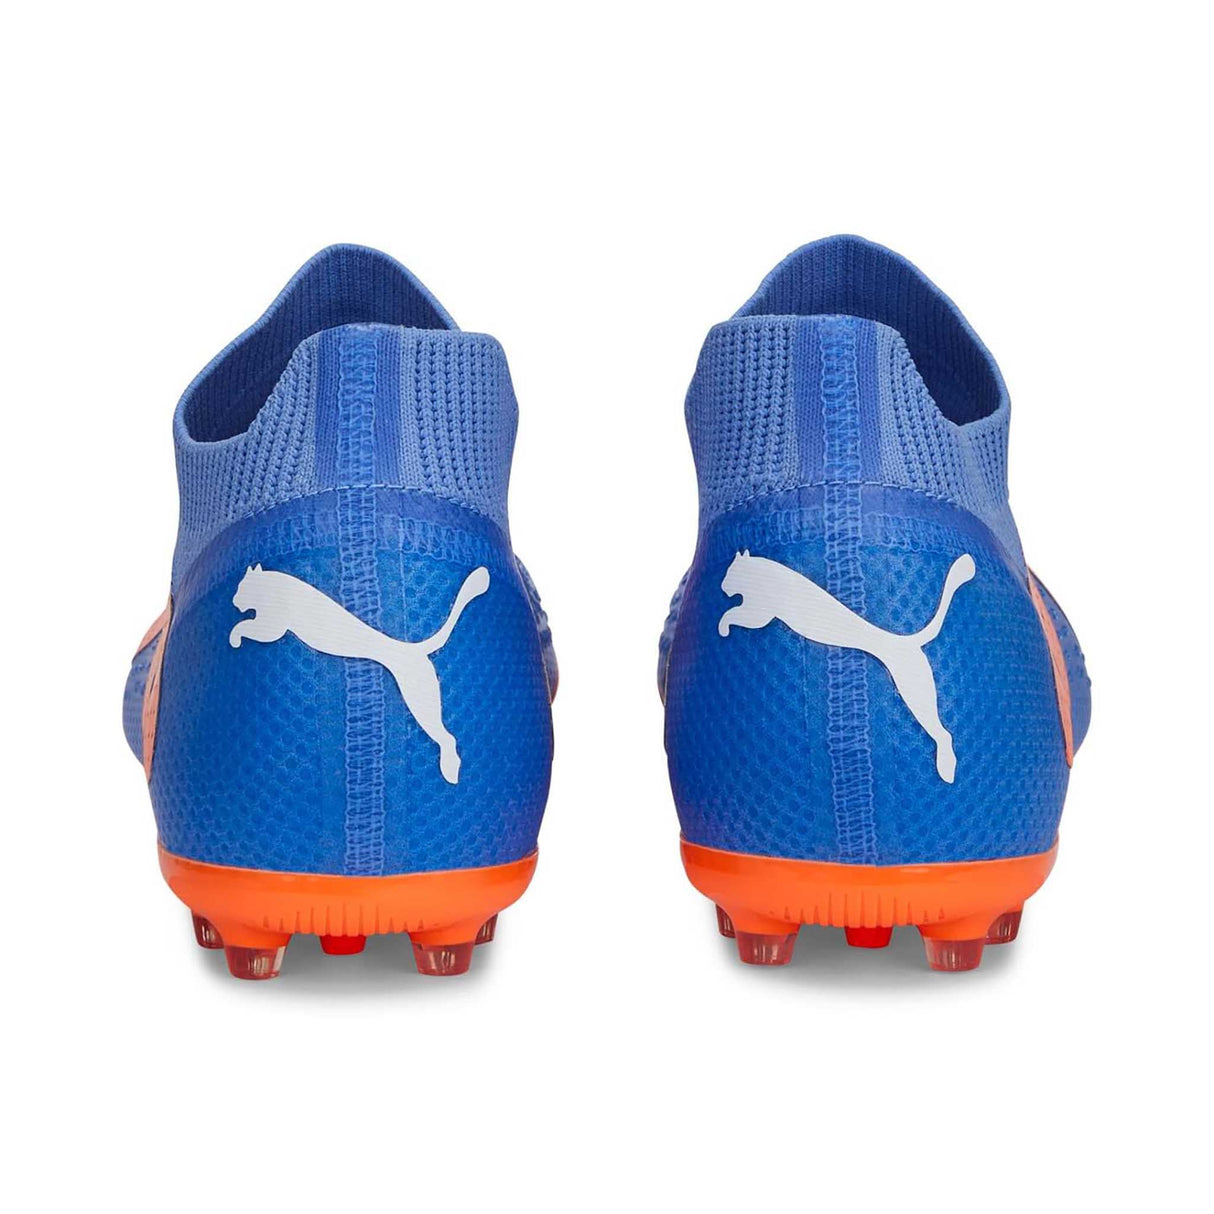 Puma Future Pro MG chaussures de soccer multi-crampons adultes talons- blue glimmer / white / orange